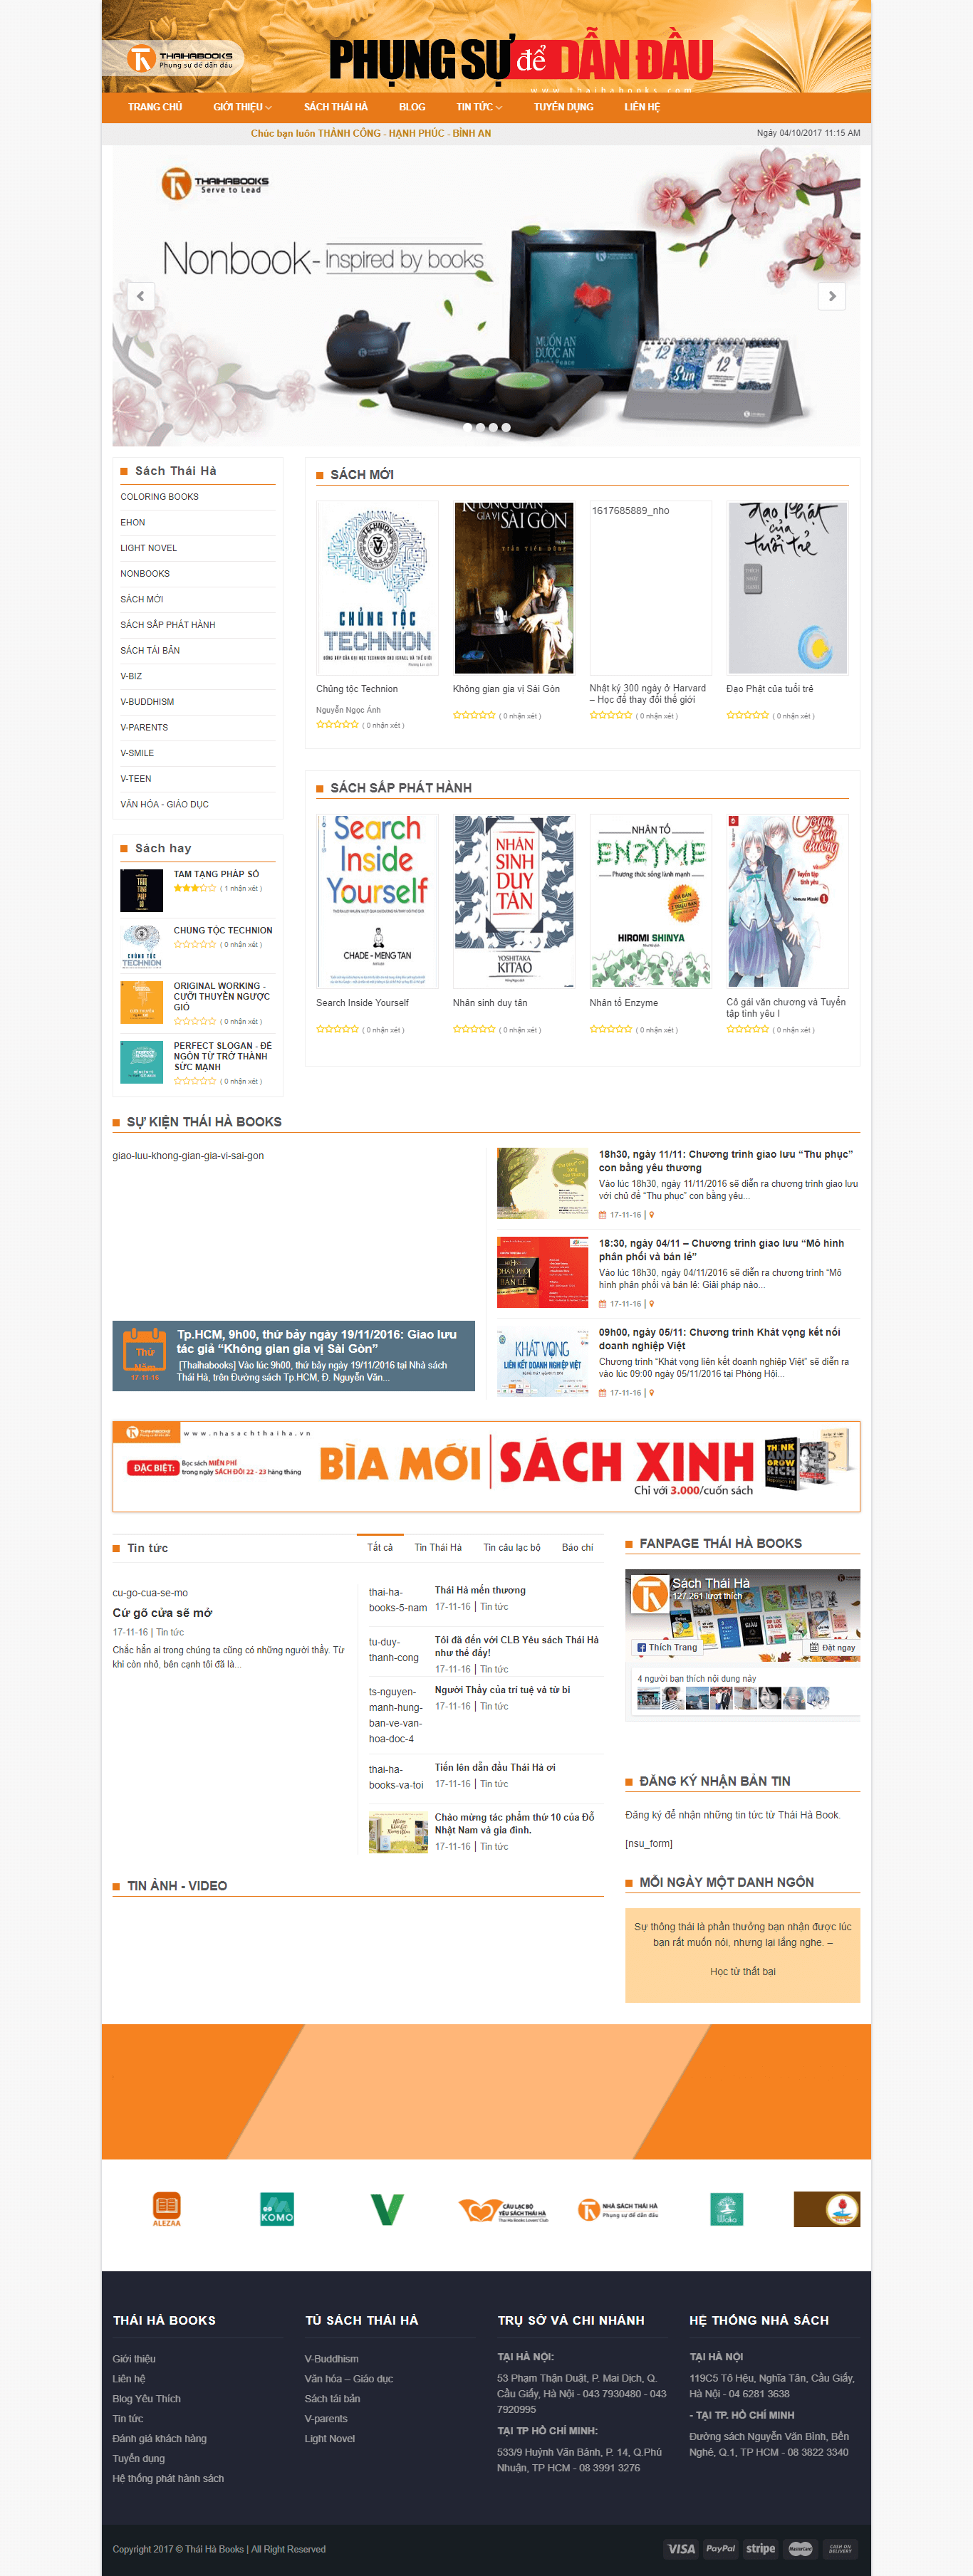 Website Bán Sách (Thái Hà Books)